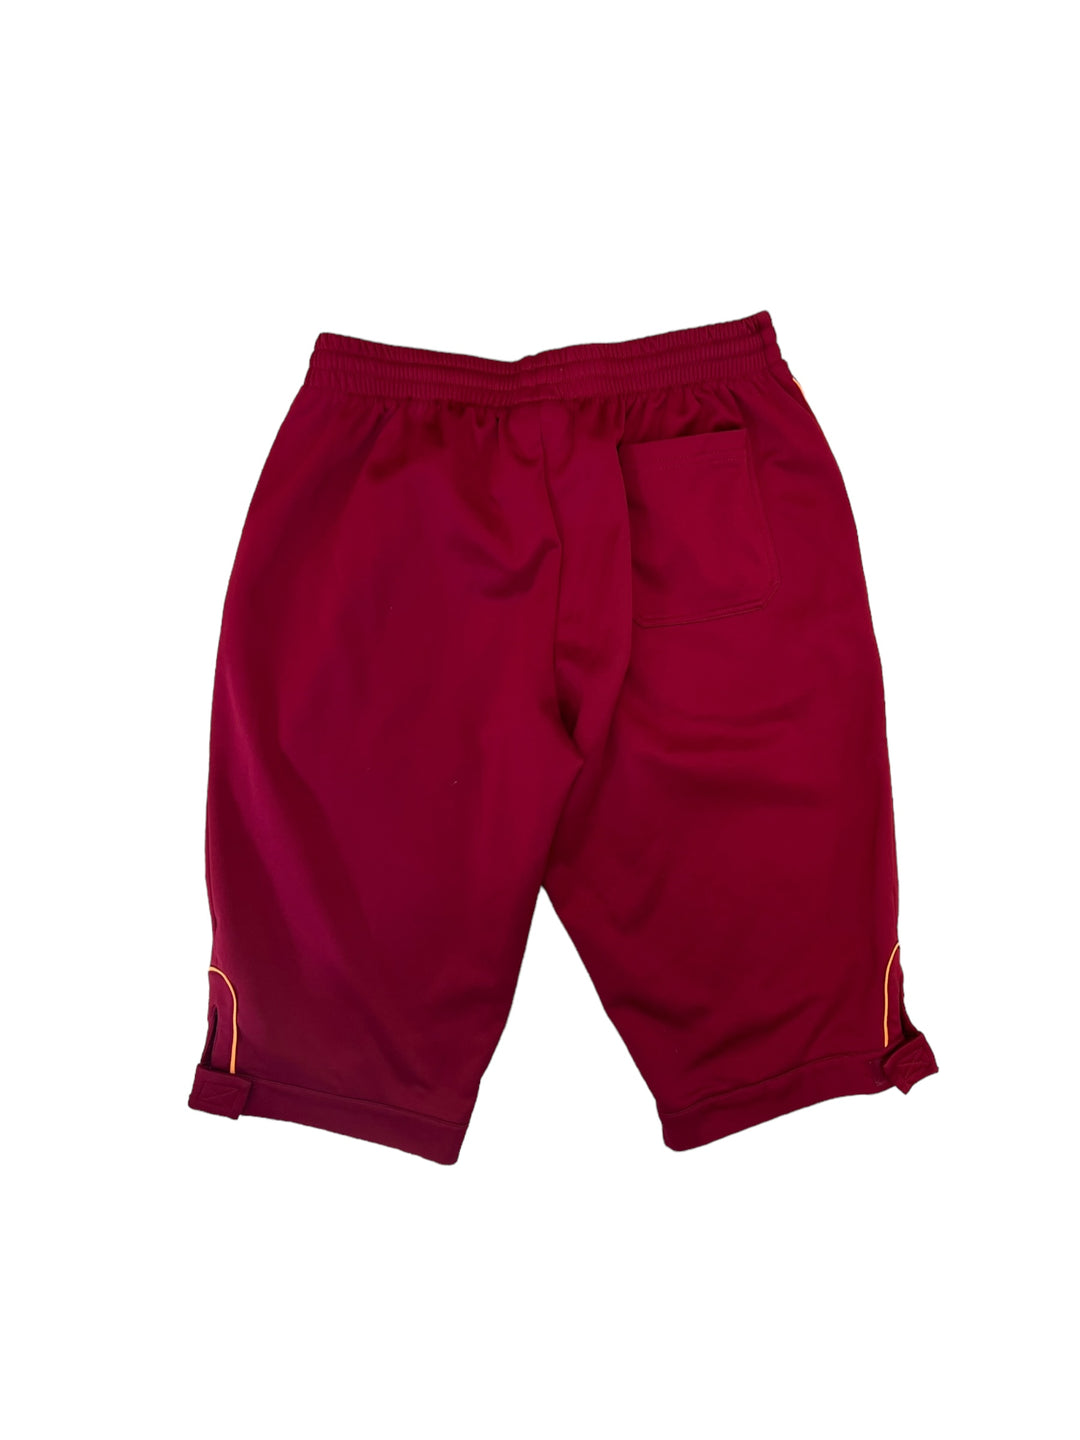 Diadora vintage shorts men’s medium